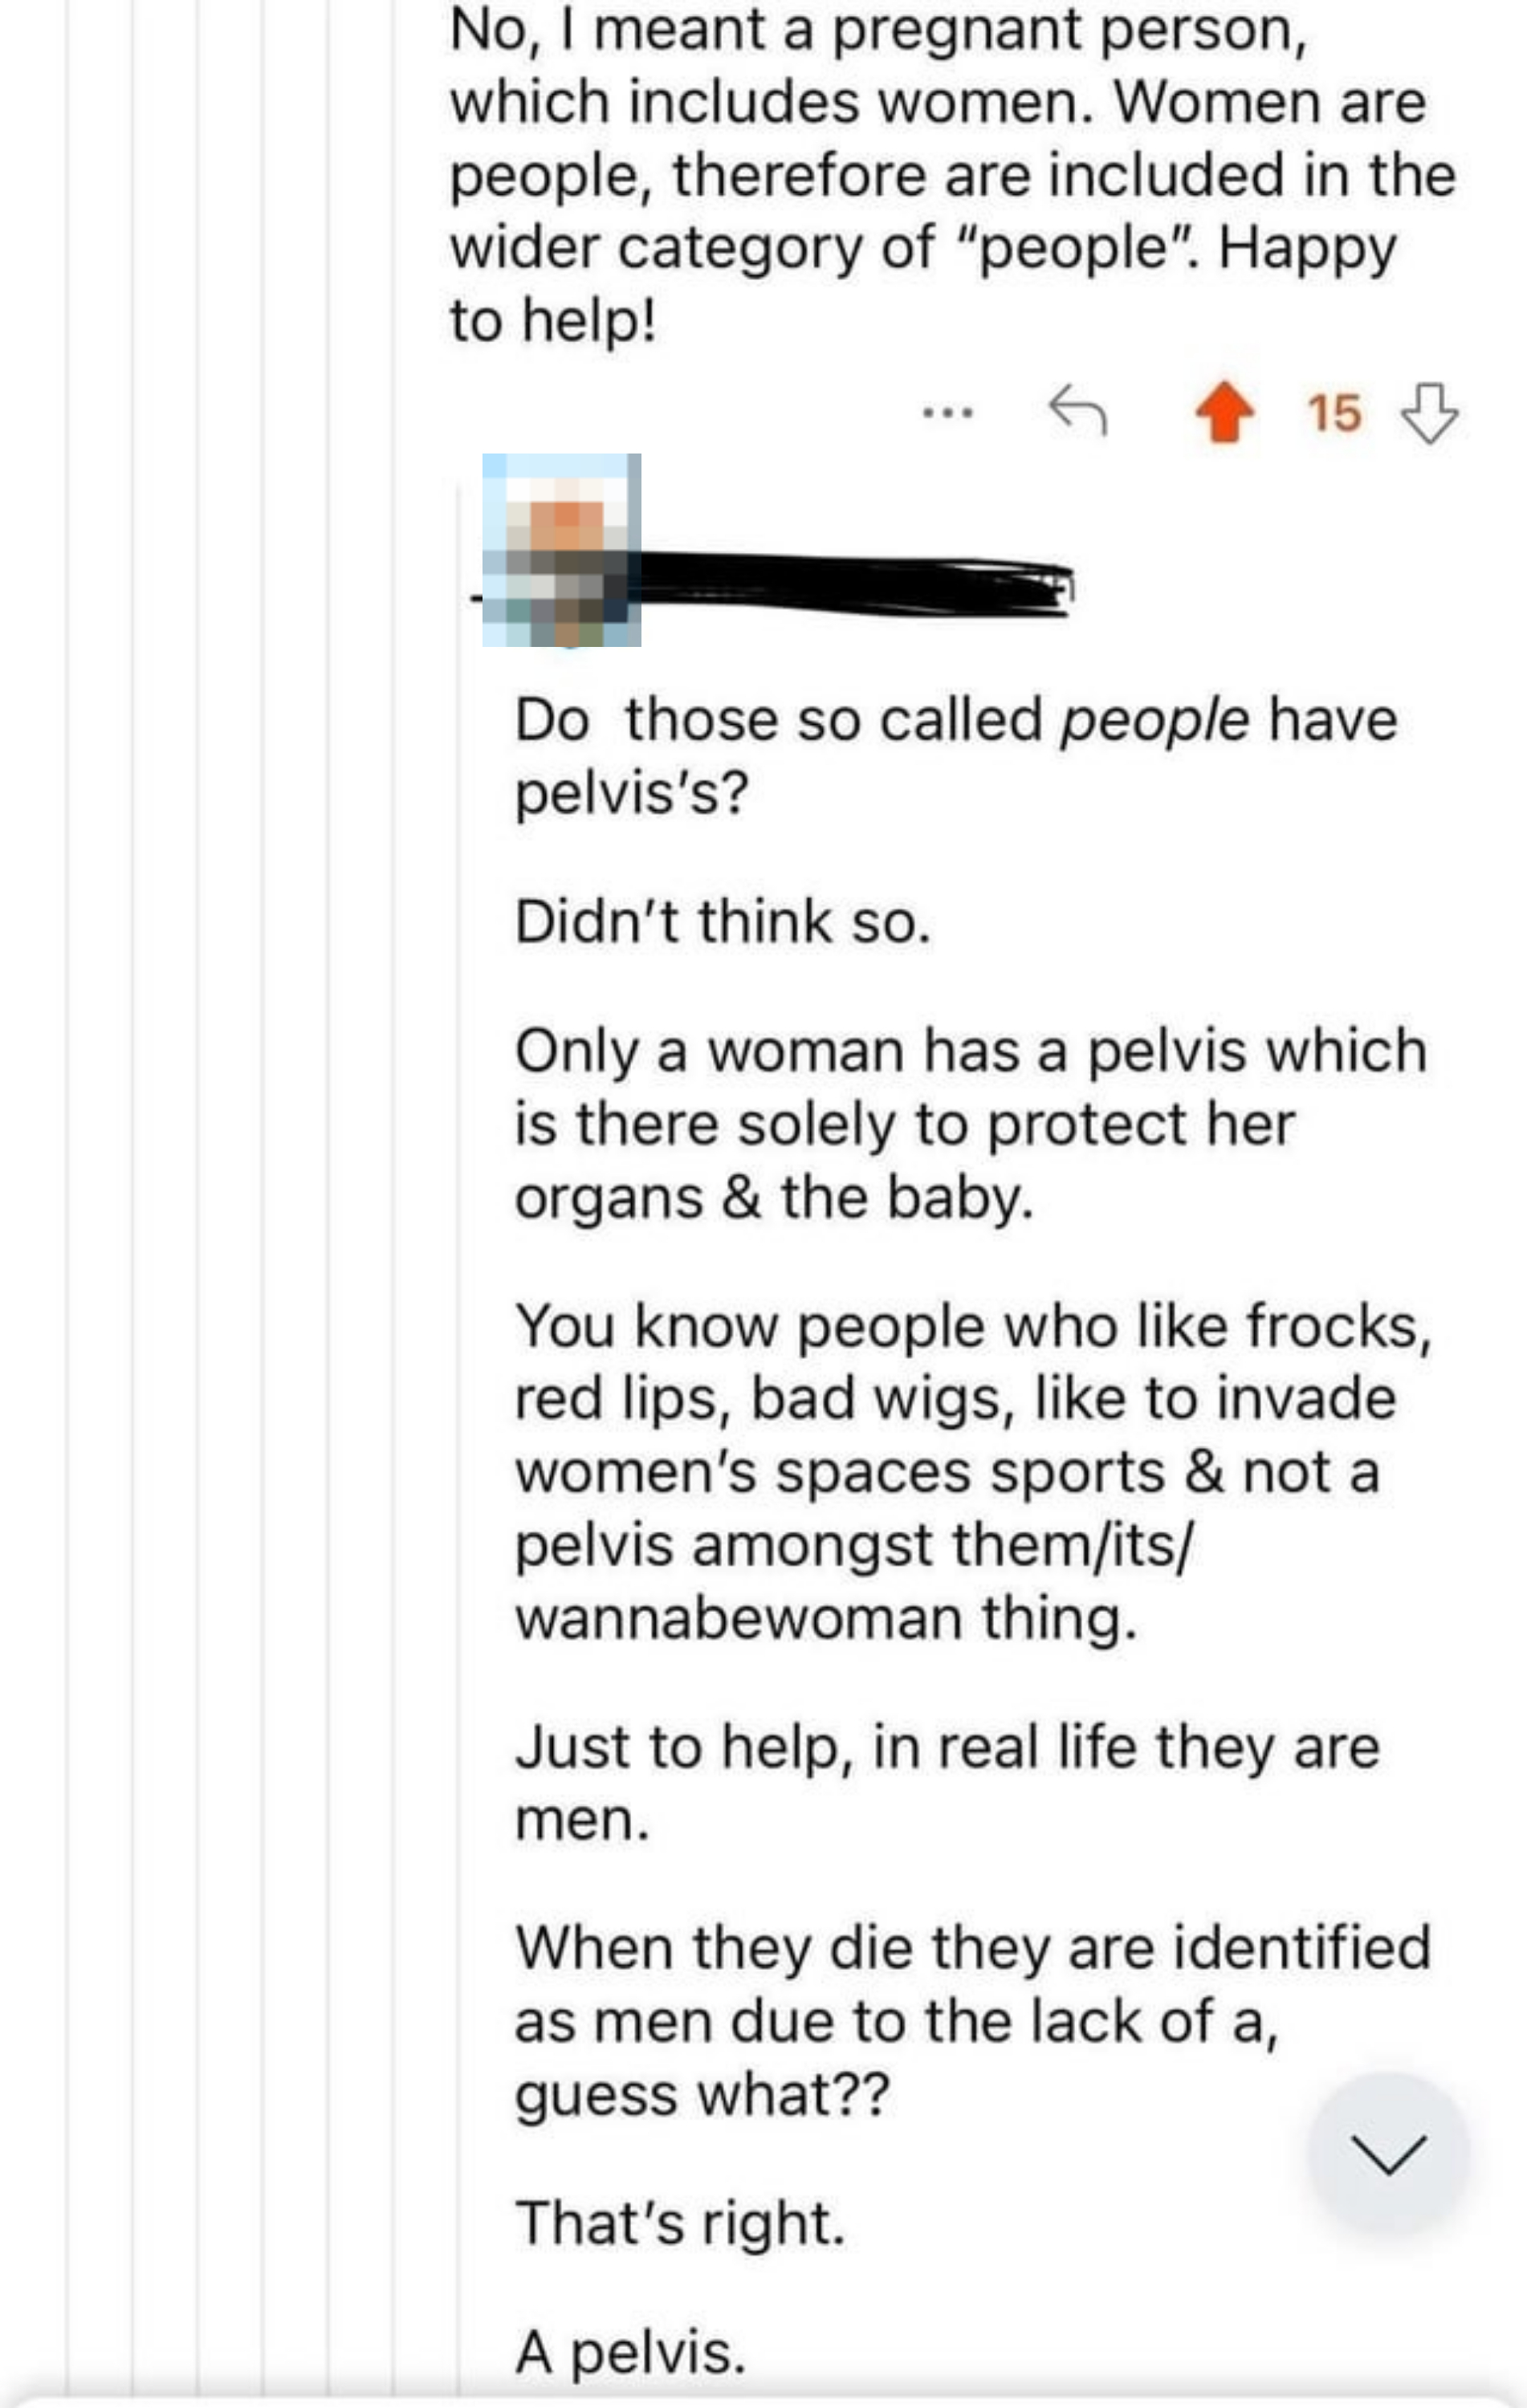 An anti-trans commenter arguing that only women have pelvises